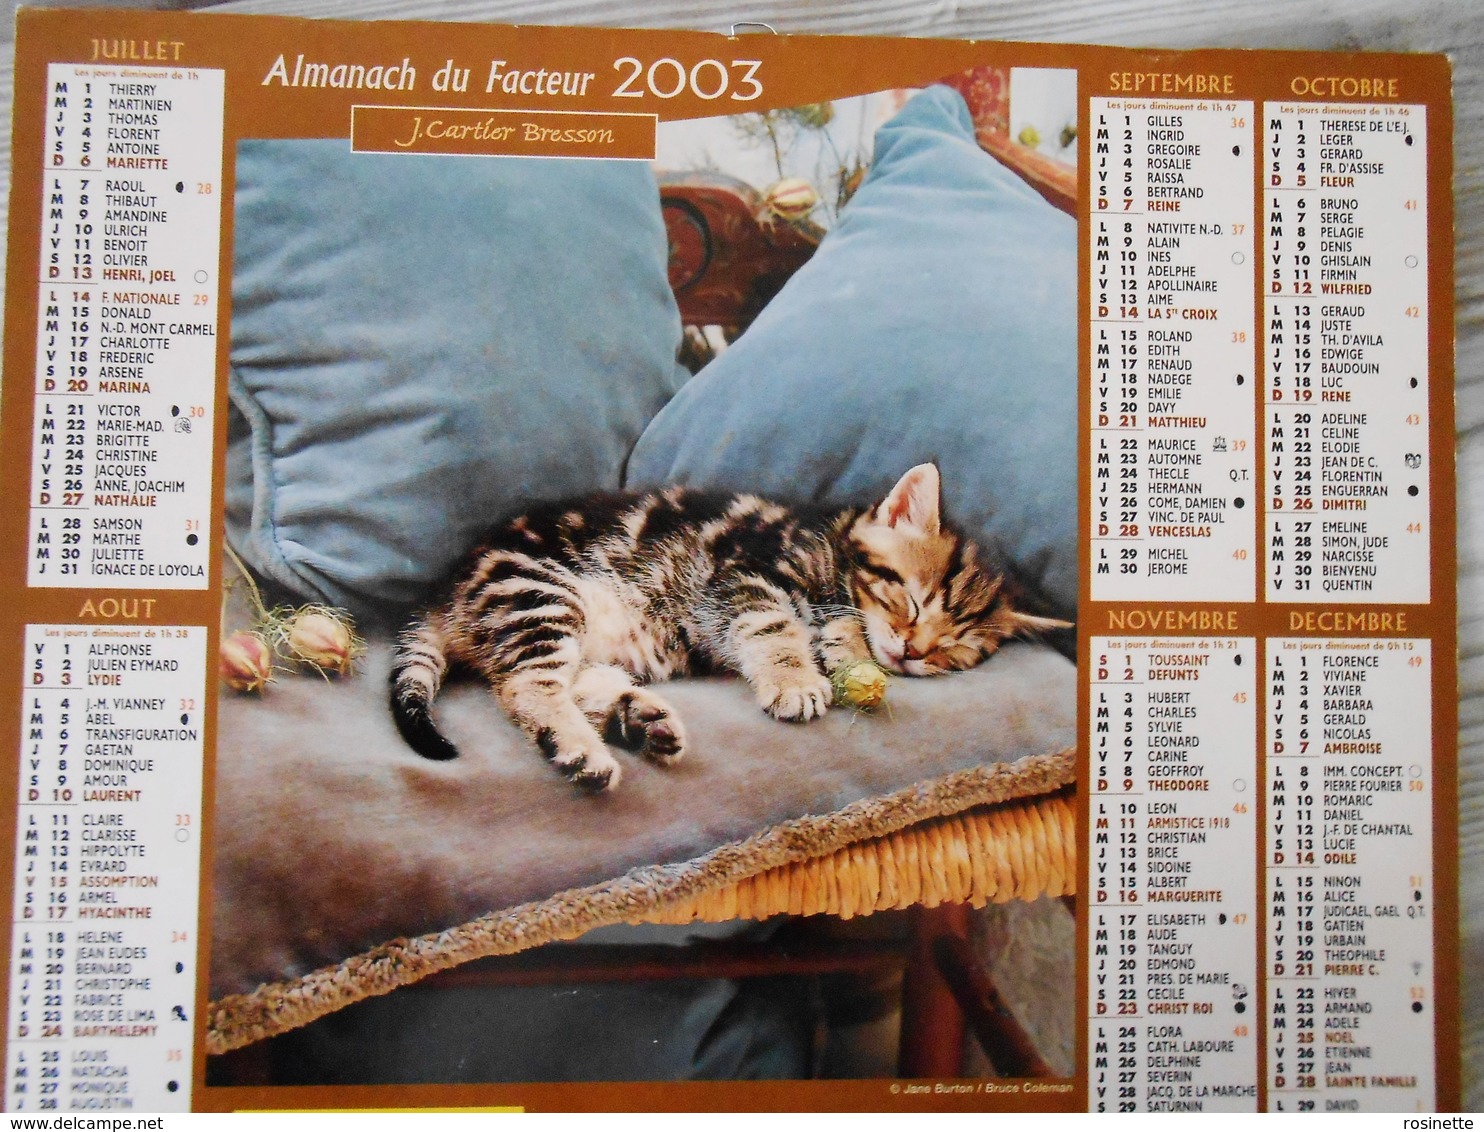 2003 almanach/calendrier J.Cartier 